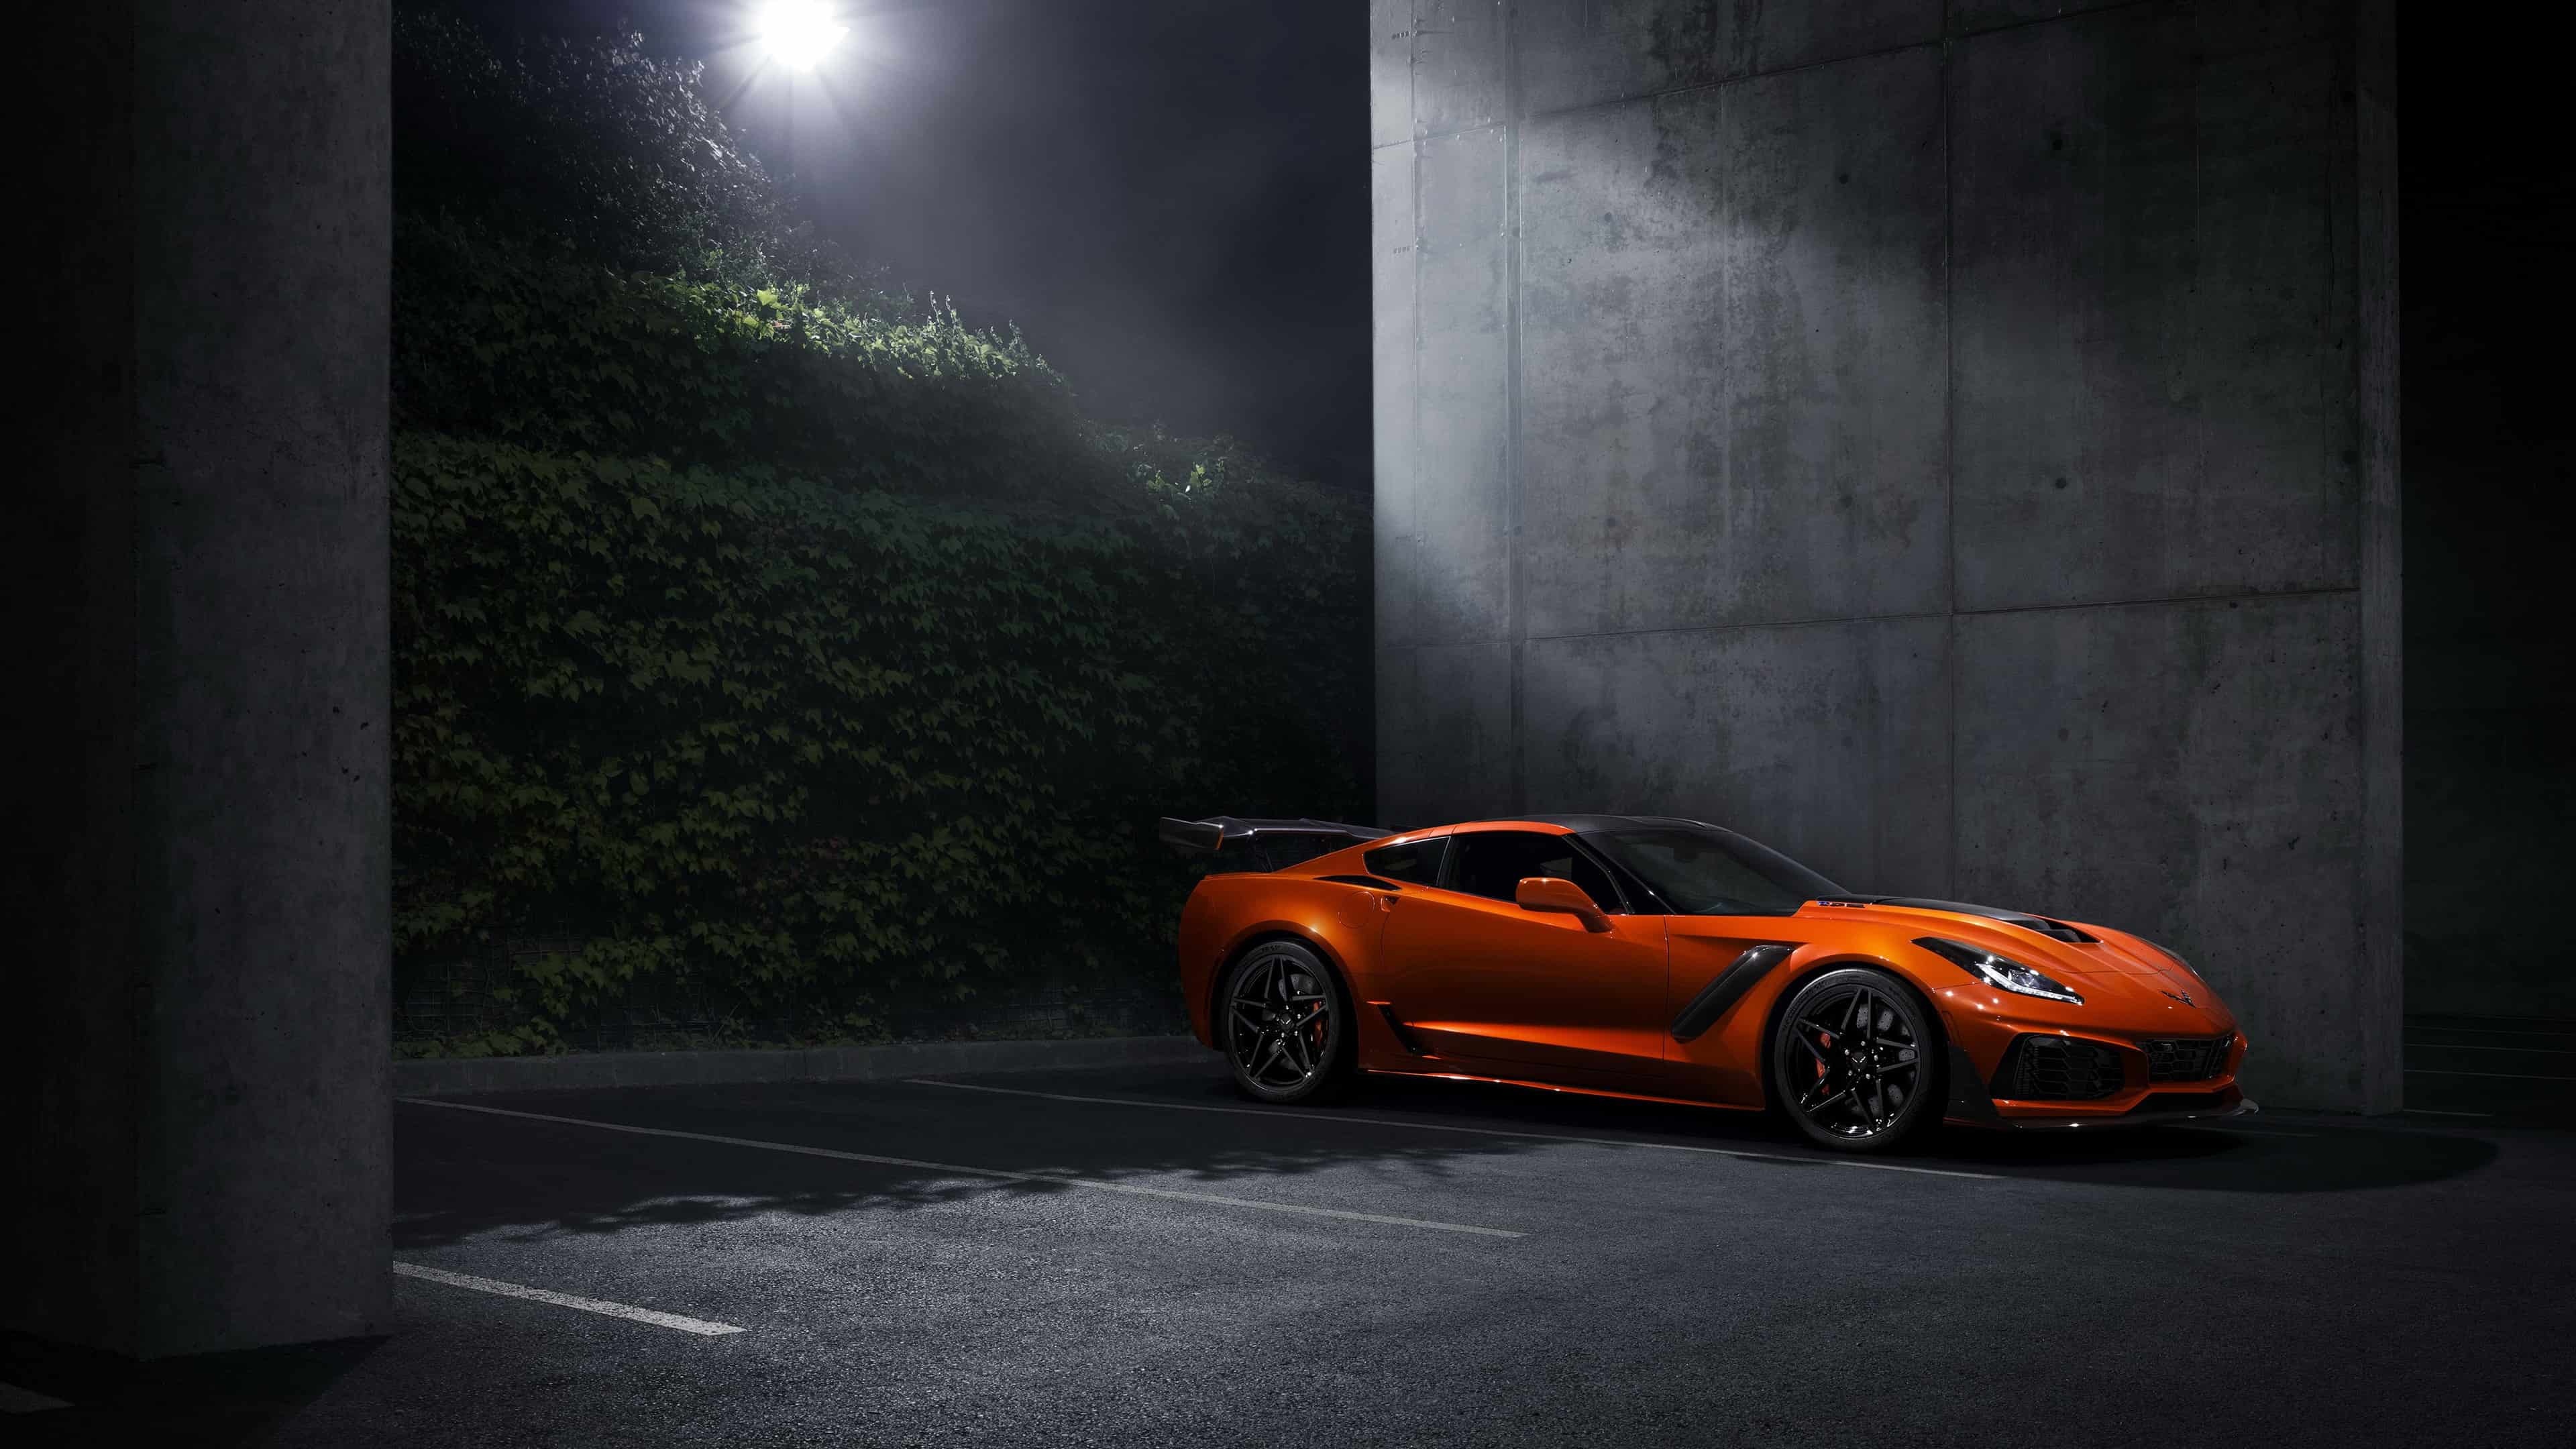 Corvette: Orange ZR1, Rear spoiler, A high-performance version of Z06, Designed for racing. 3840x2160 4K Background.